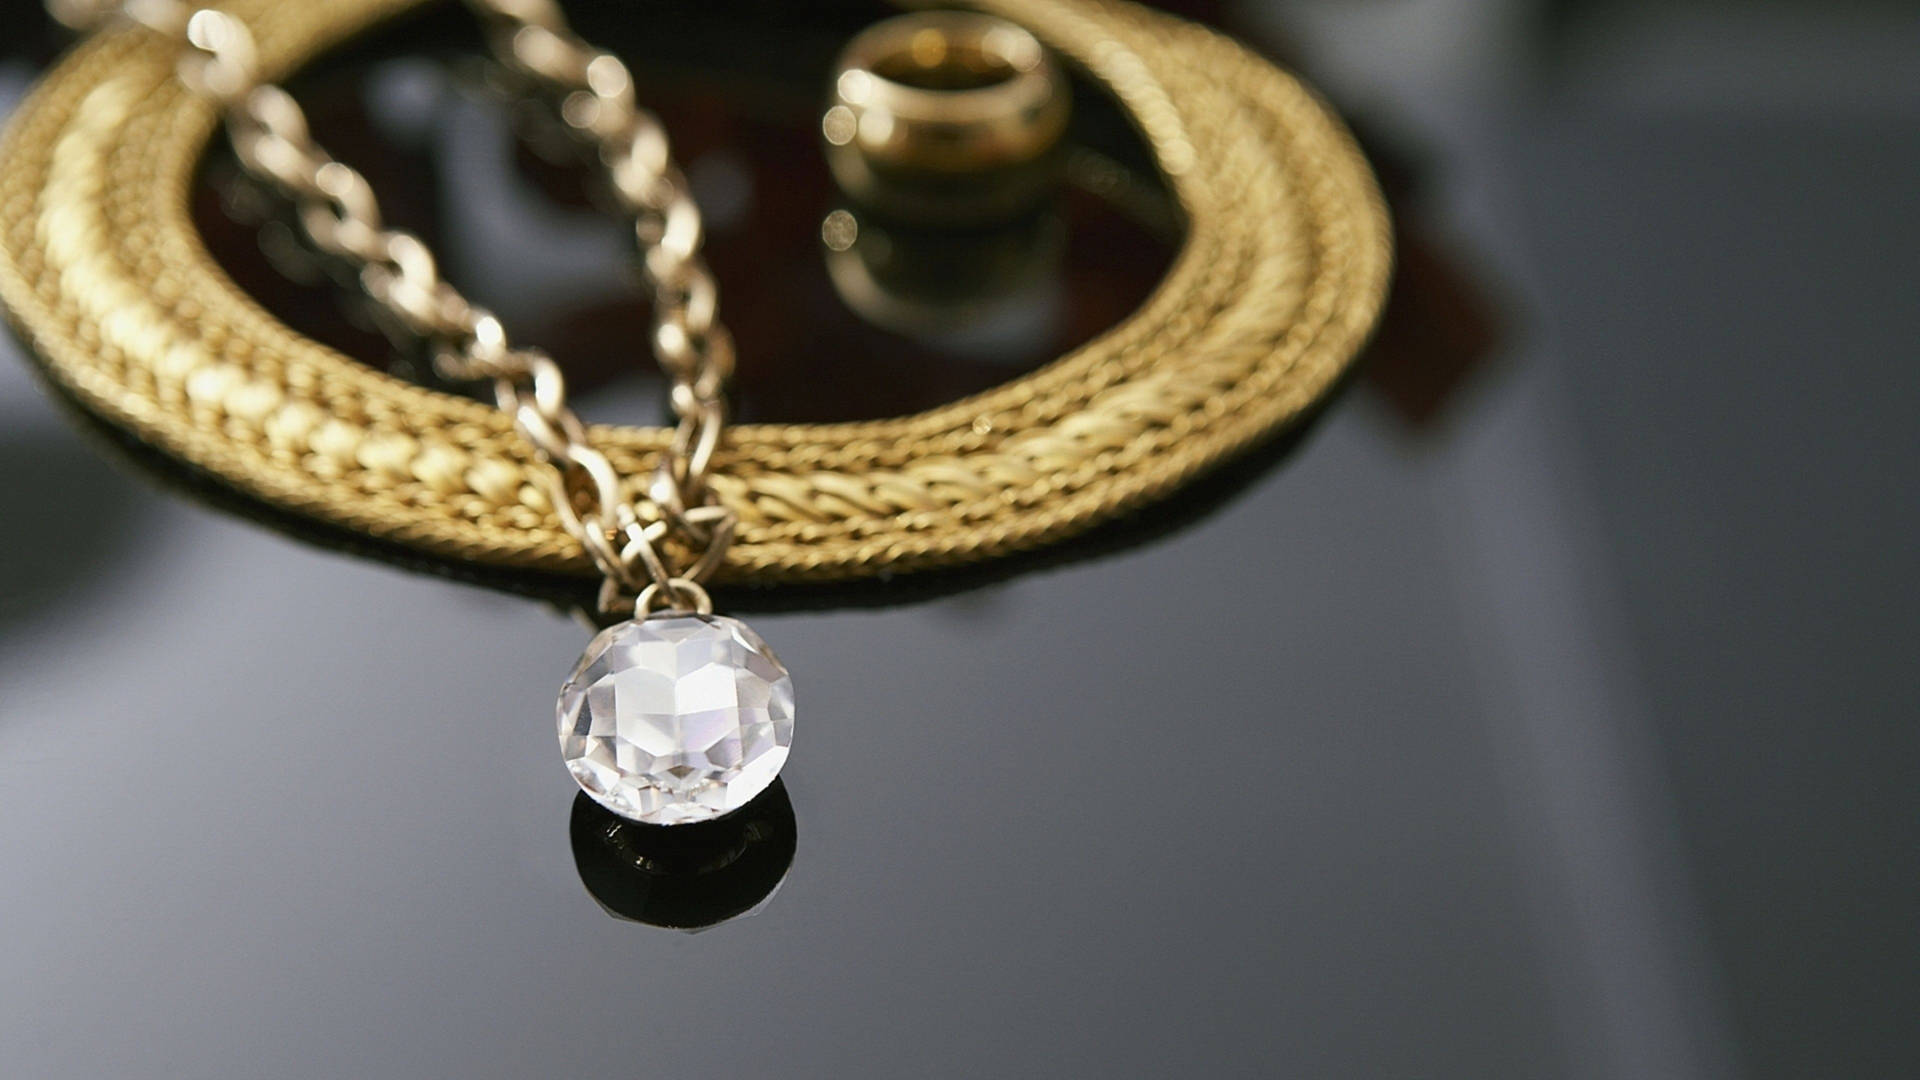 Jewelry Necklace With Diamond Pendant Background